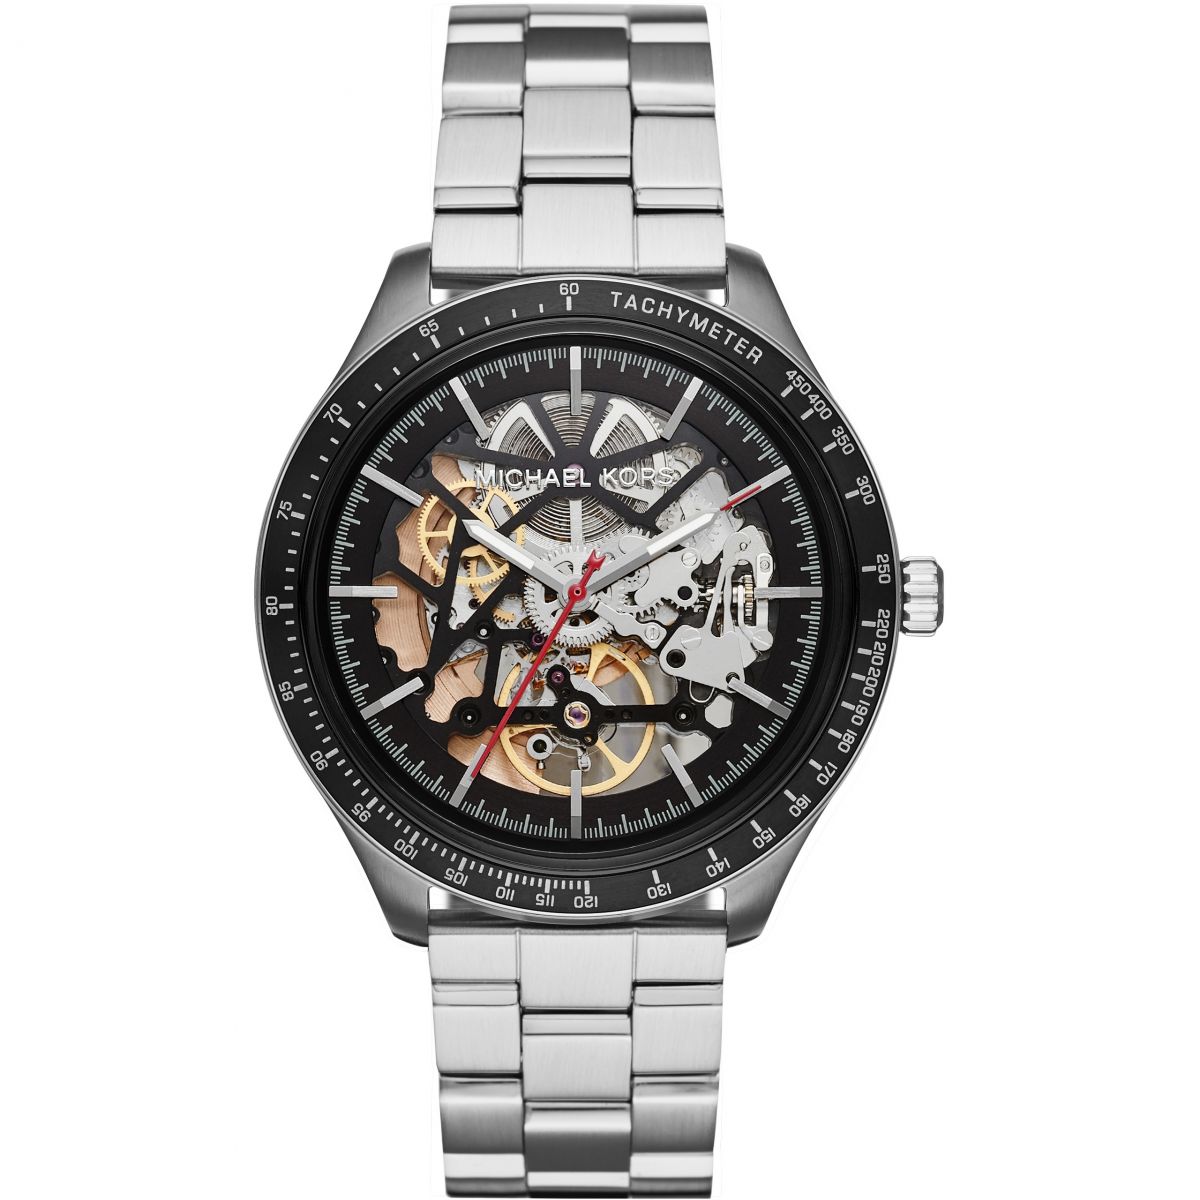 Michael Kors Merrick MK9037 Automatic Analog Men's Watch